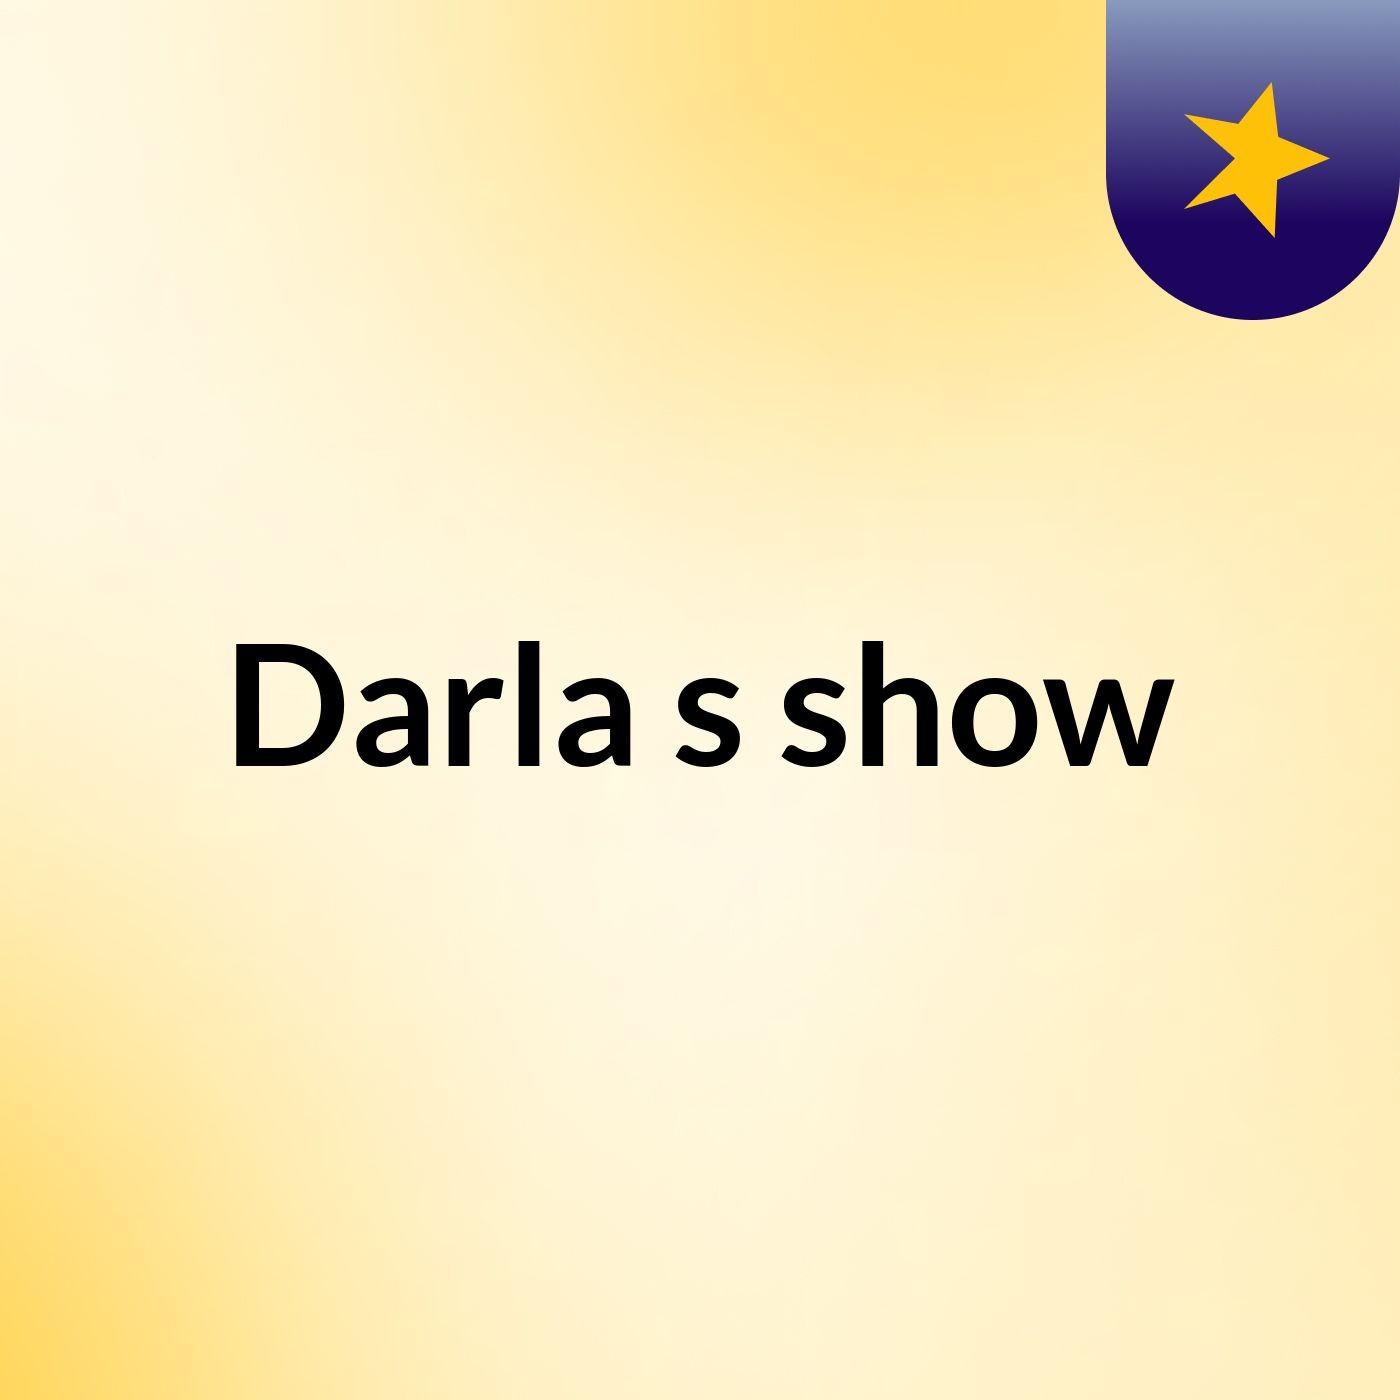 Darla's show